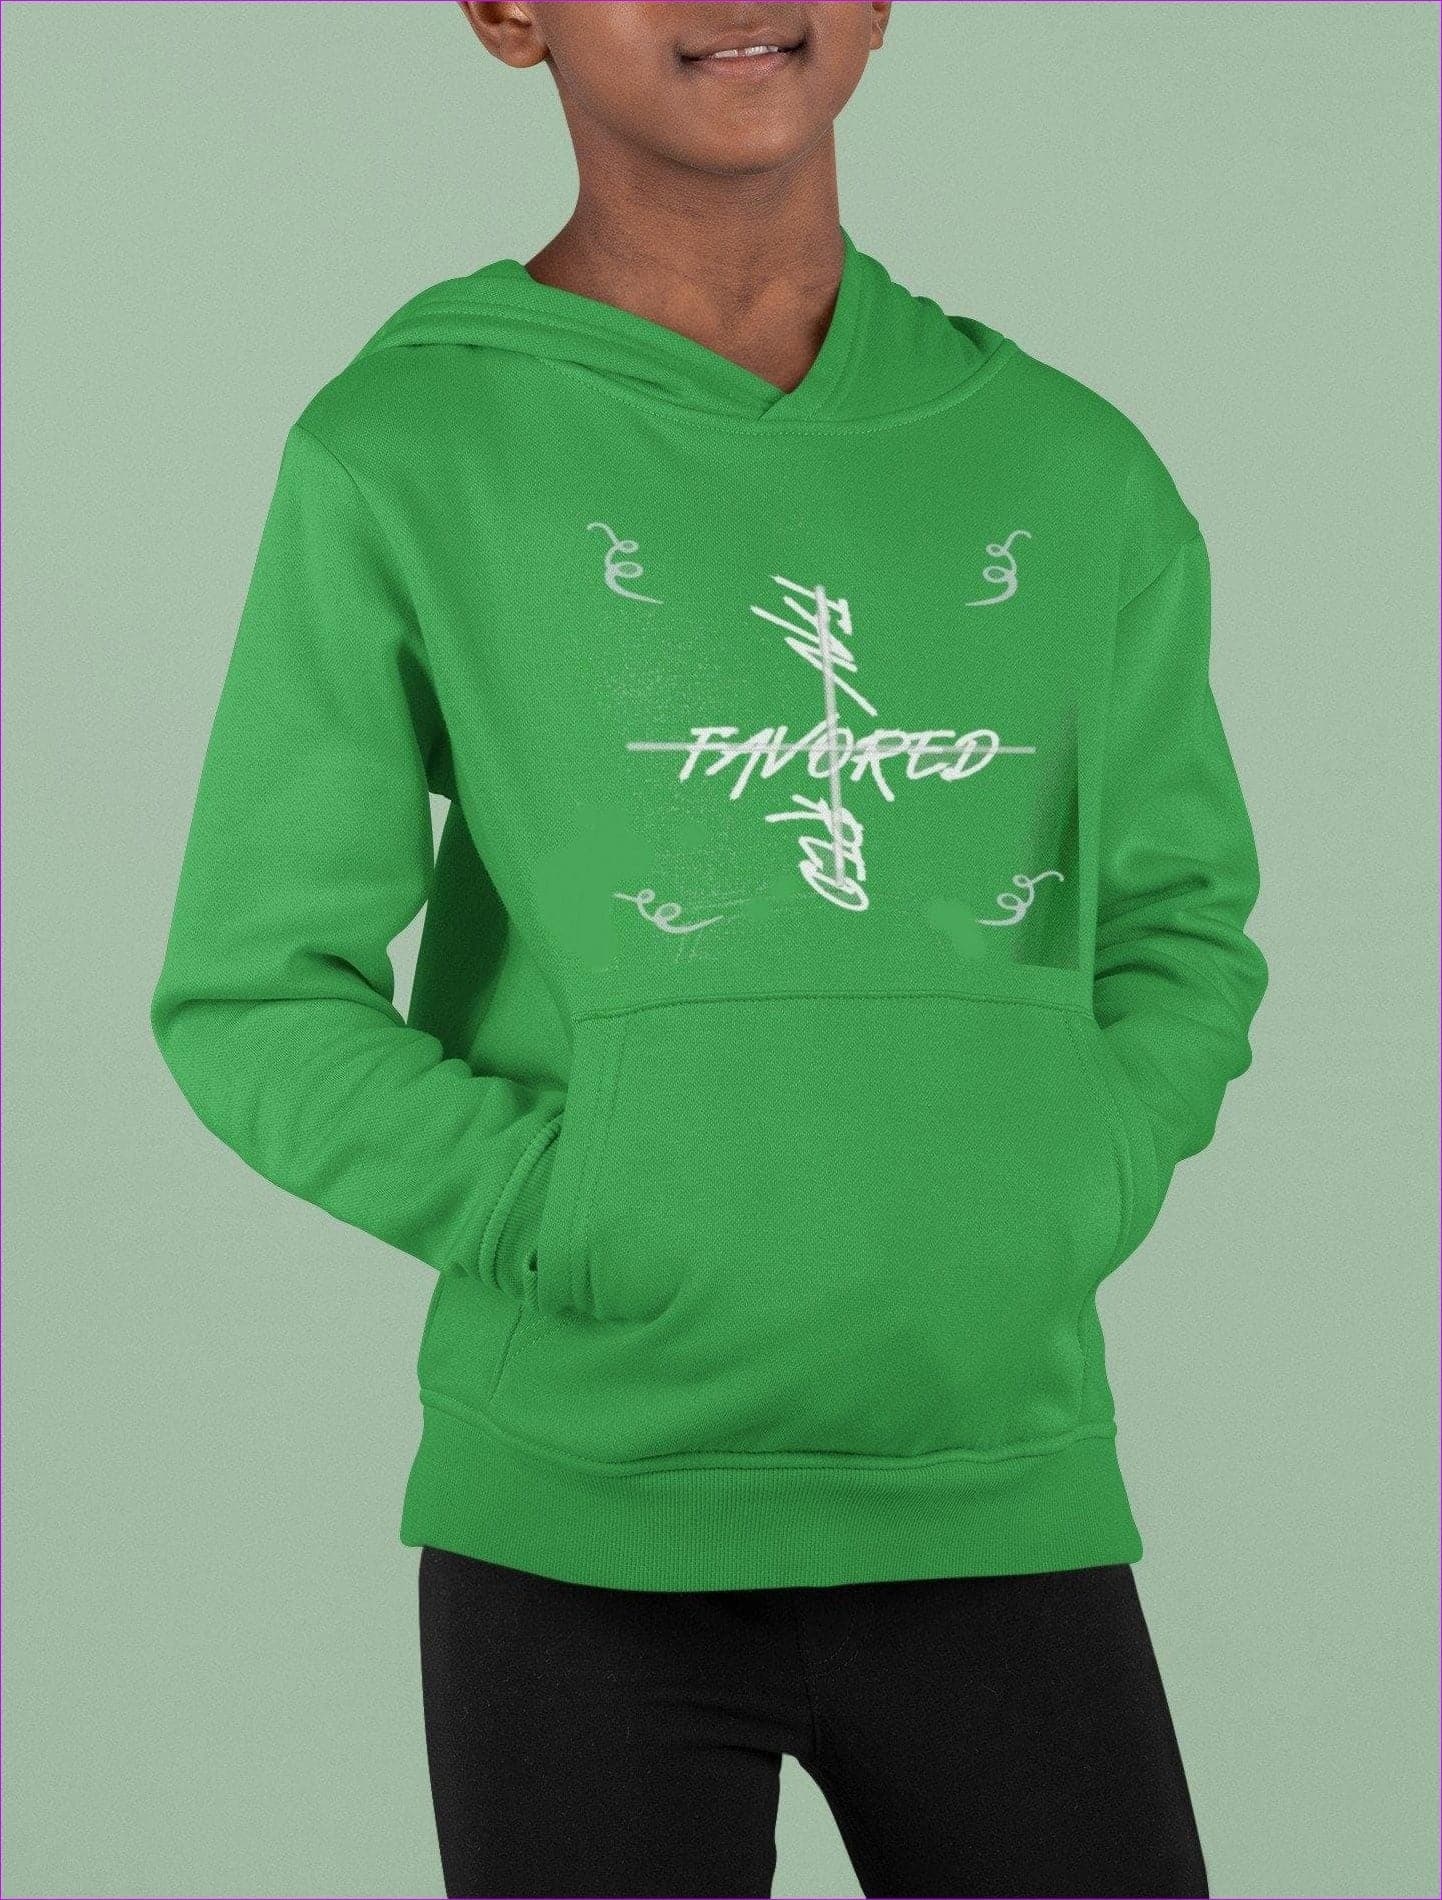 L Irish Green Favored 2 Heavy Blend Youth Hooded Sweatshirt - kids hoodies at TFC&H Co.